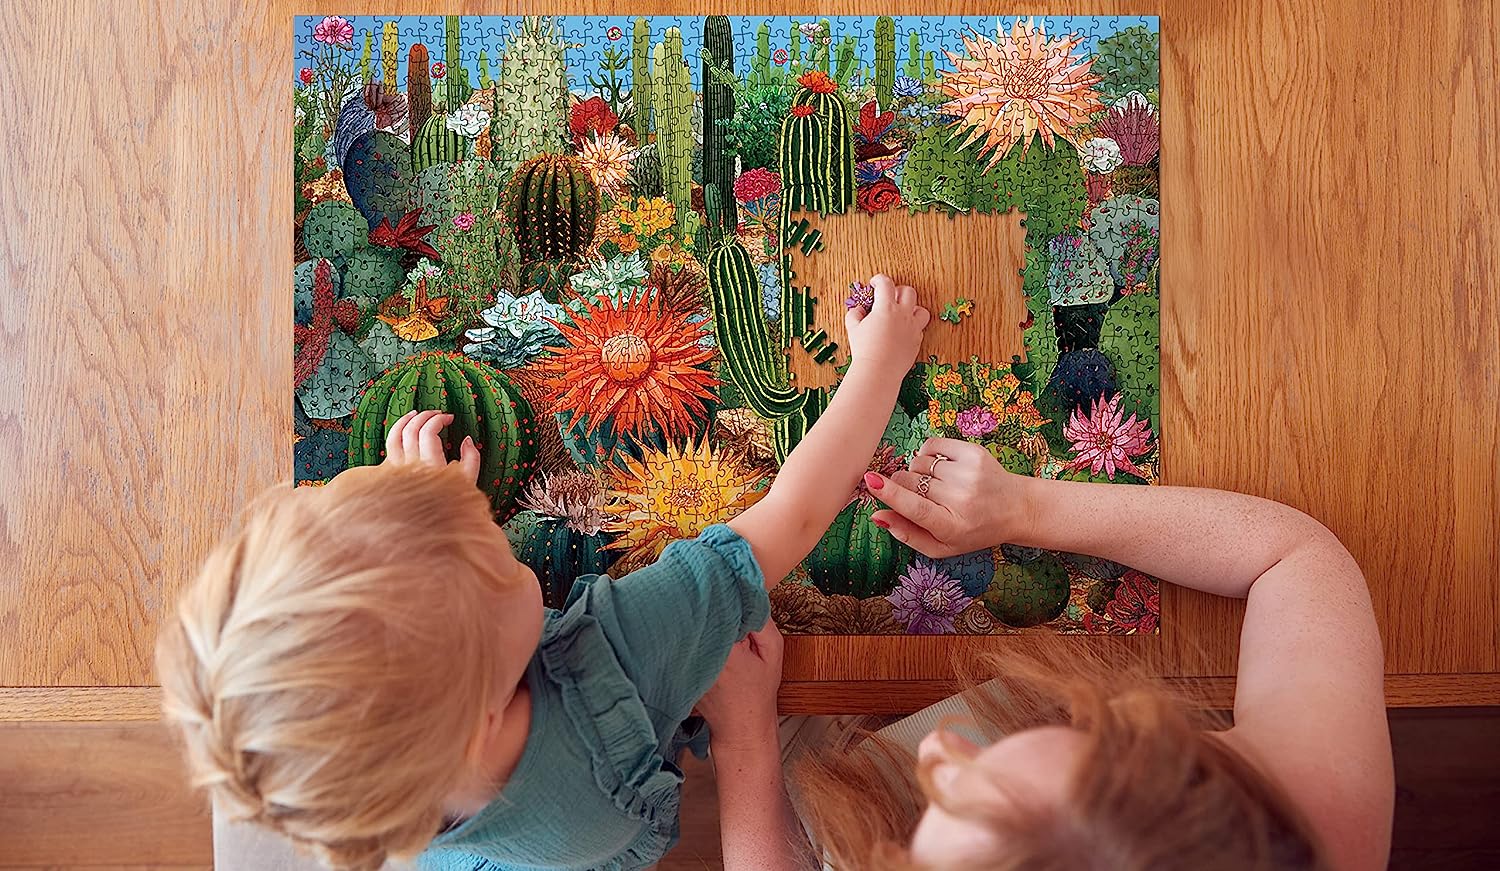 Pickforu® Kaktusblumengarten-Puzzle 1000 Teile